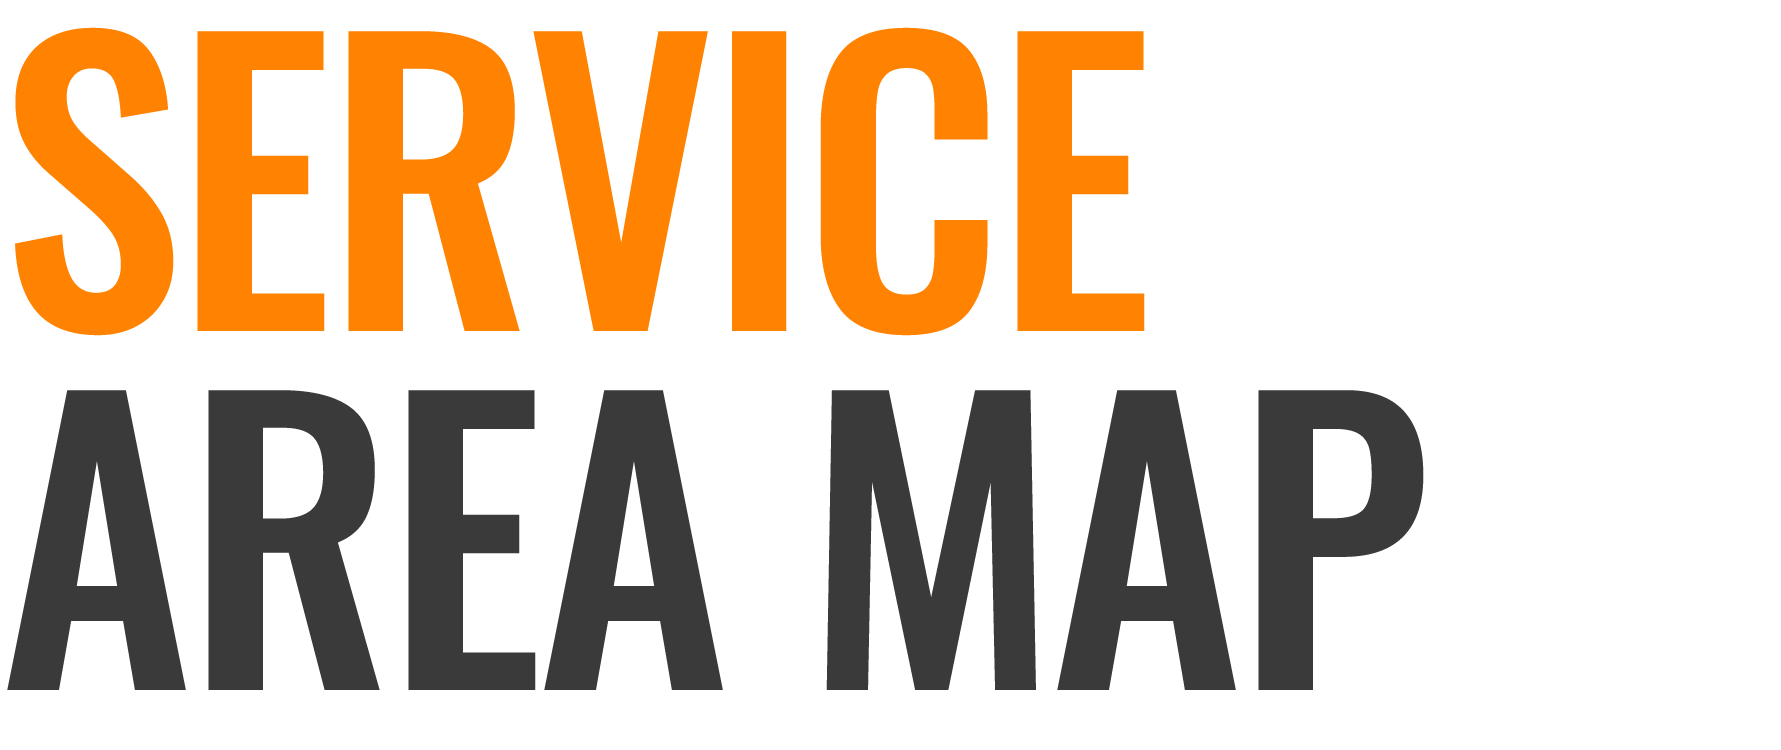 service area map, list, big g express